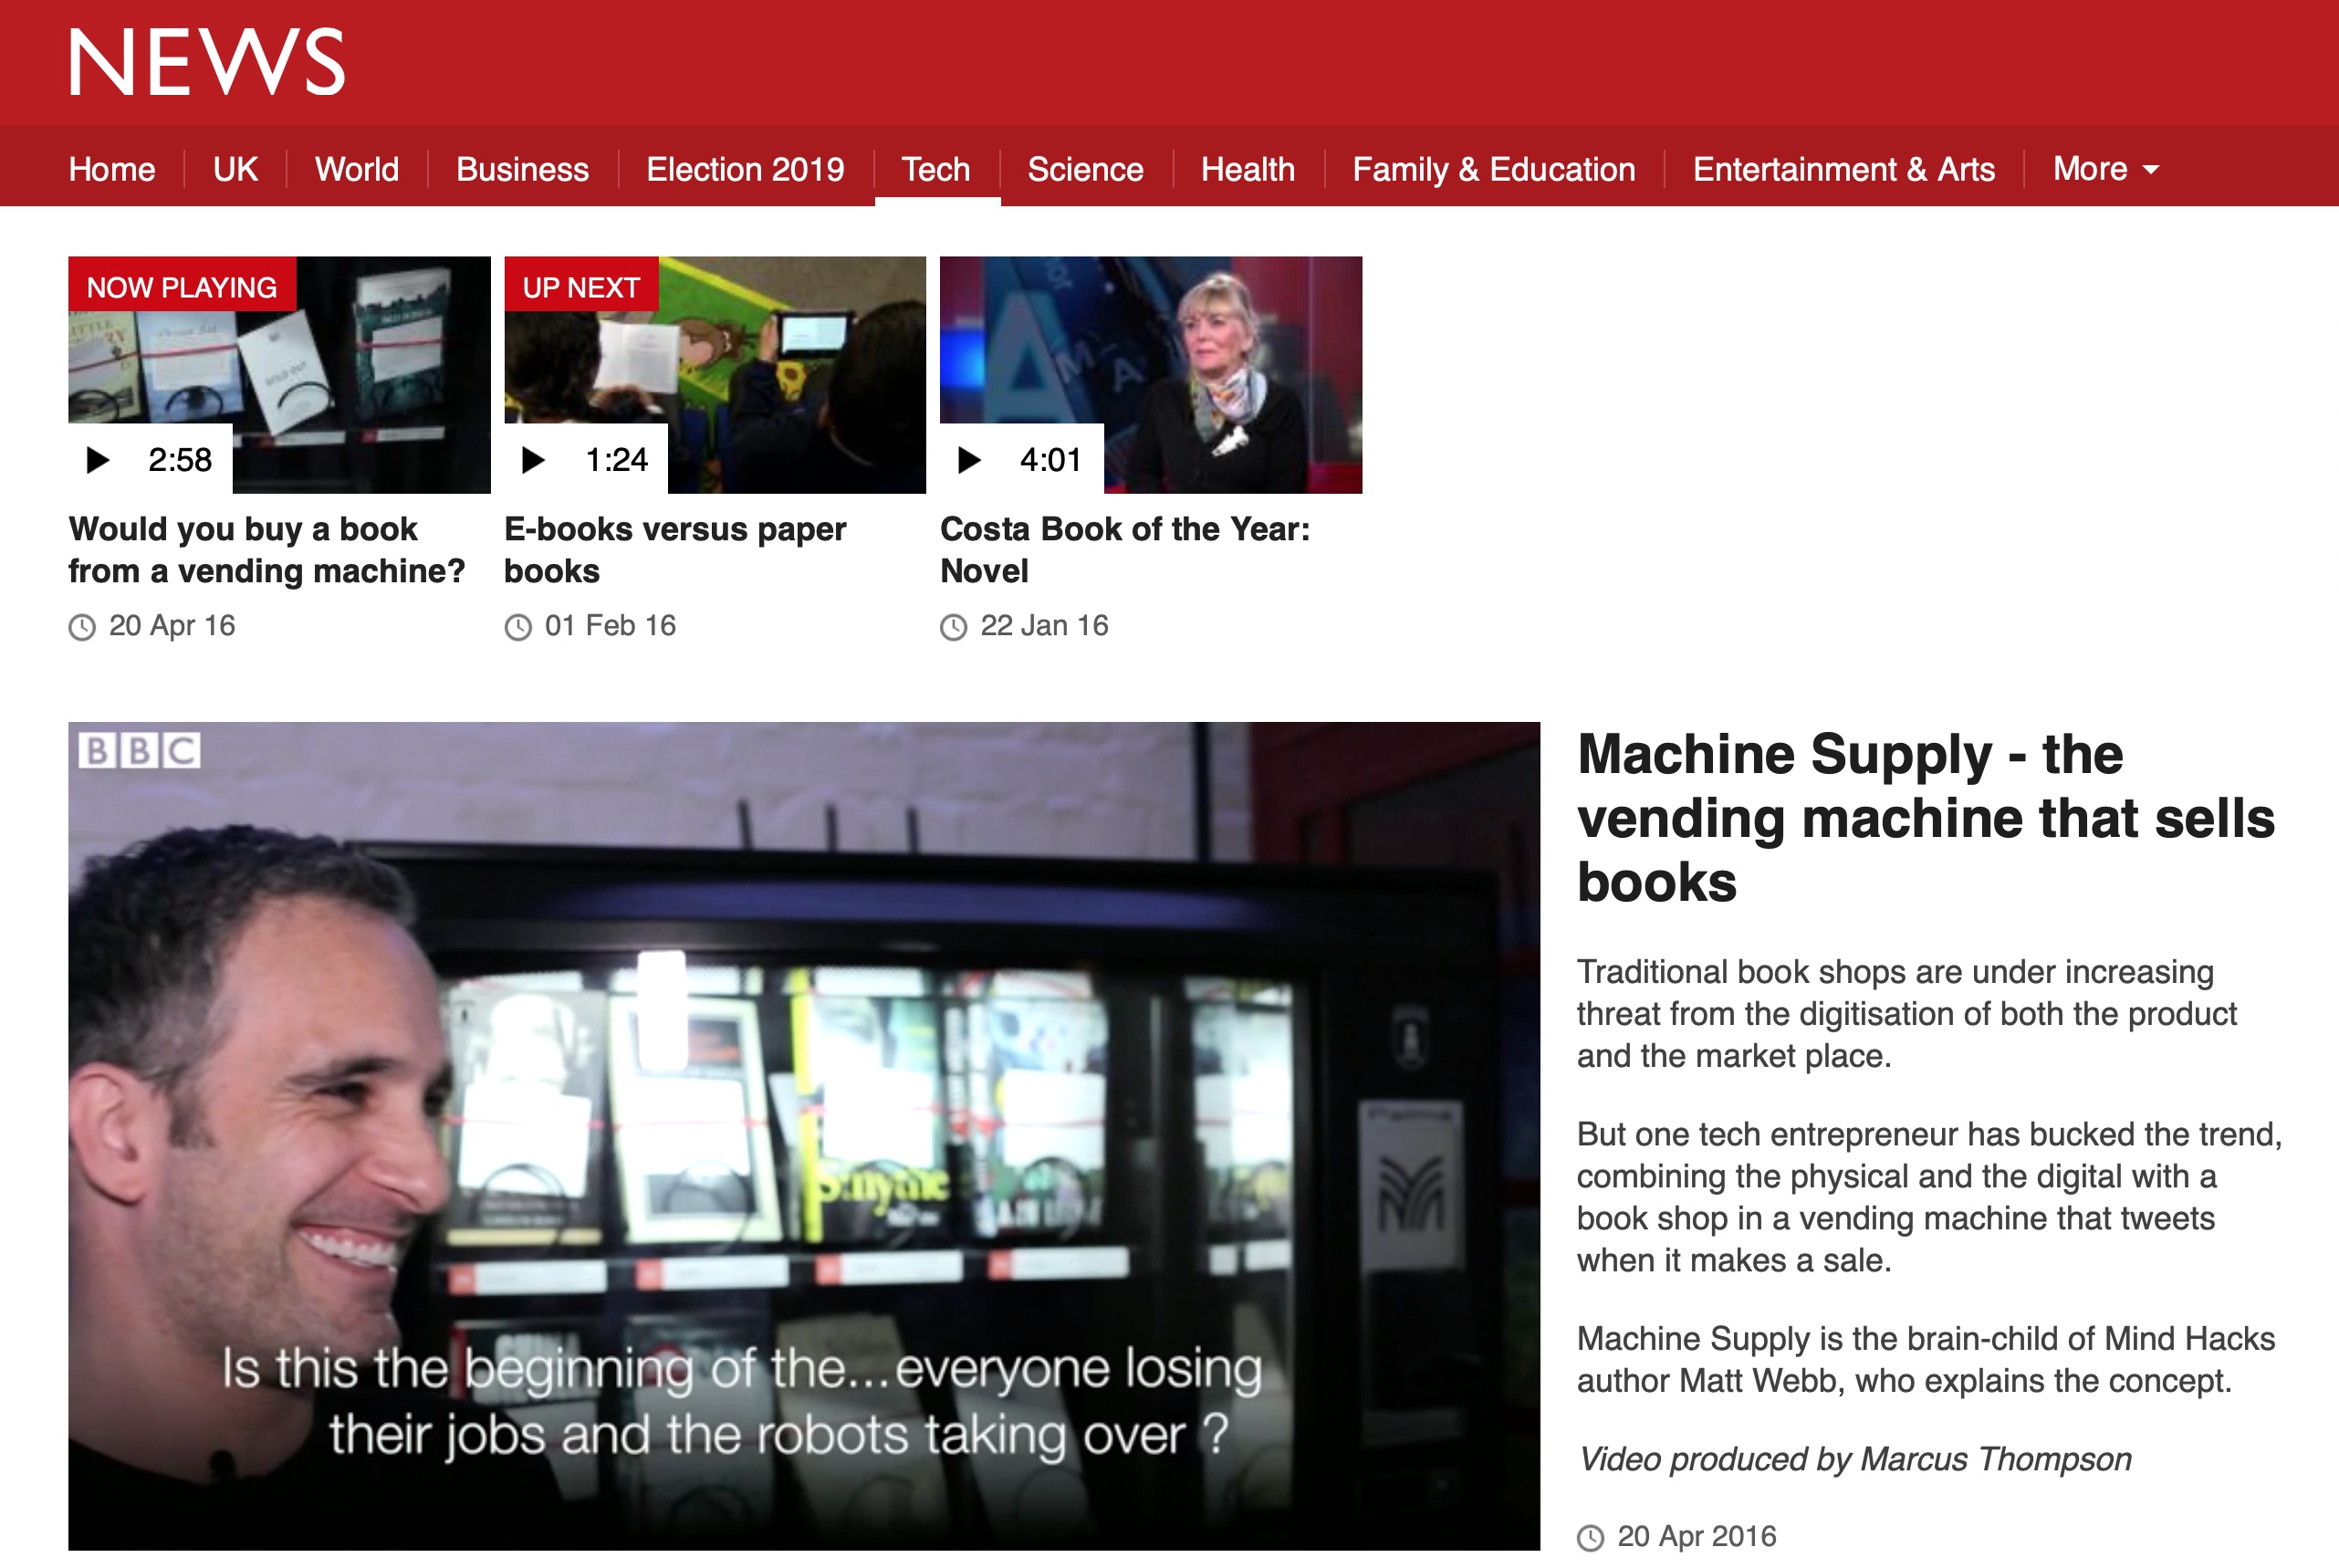 Screen-grab of BBC News